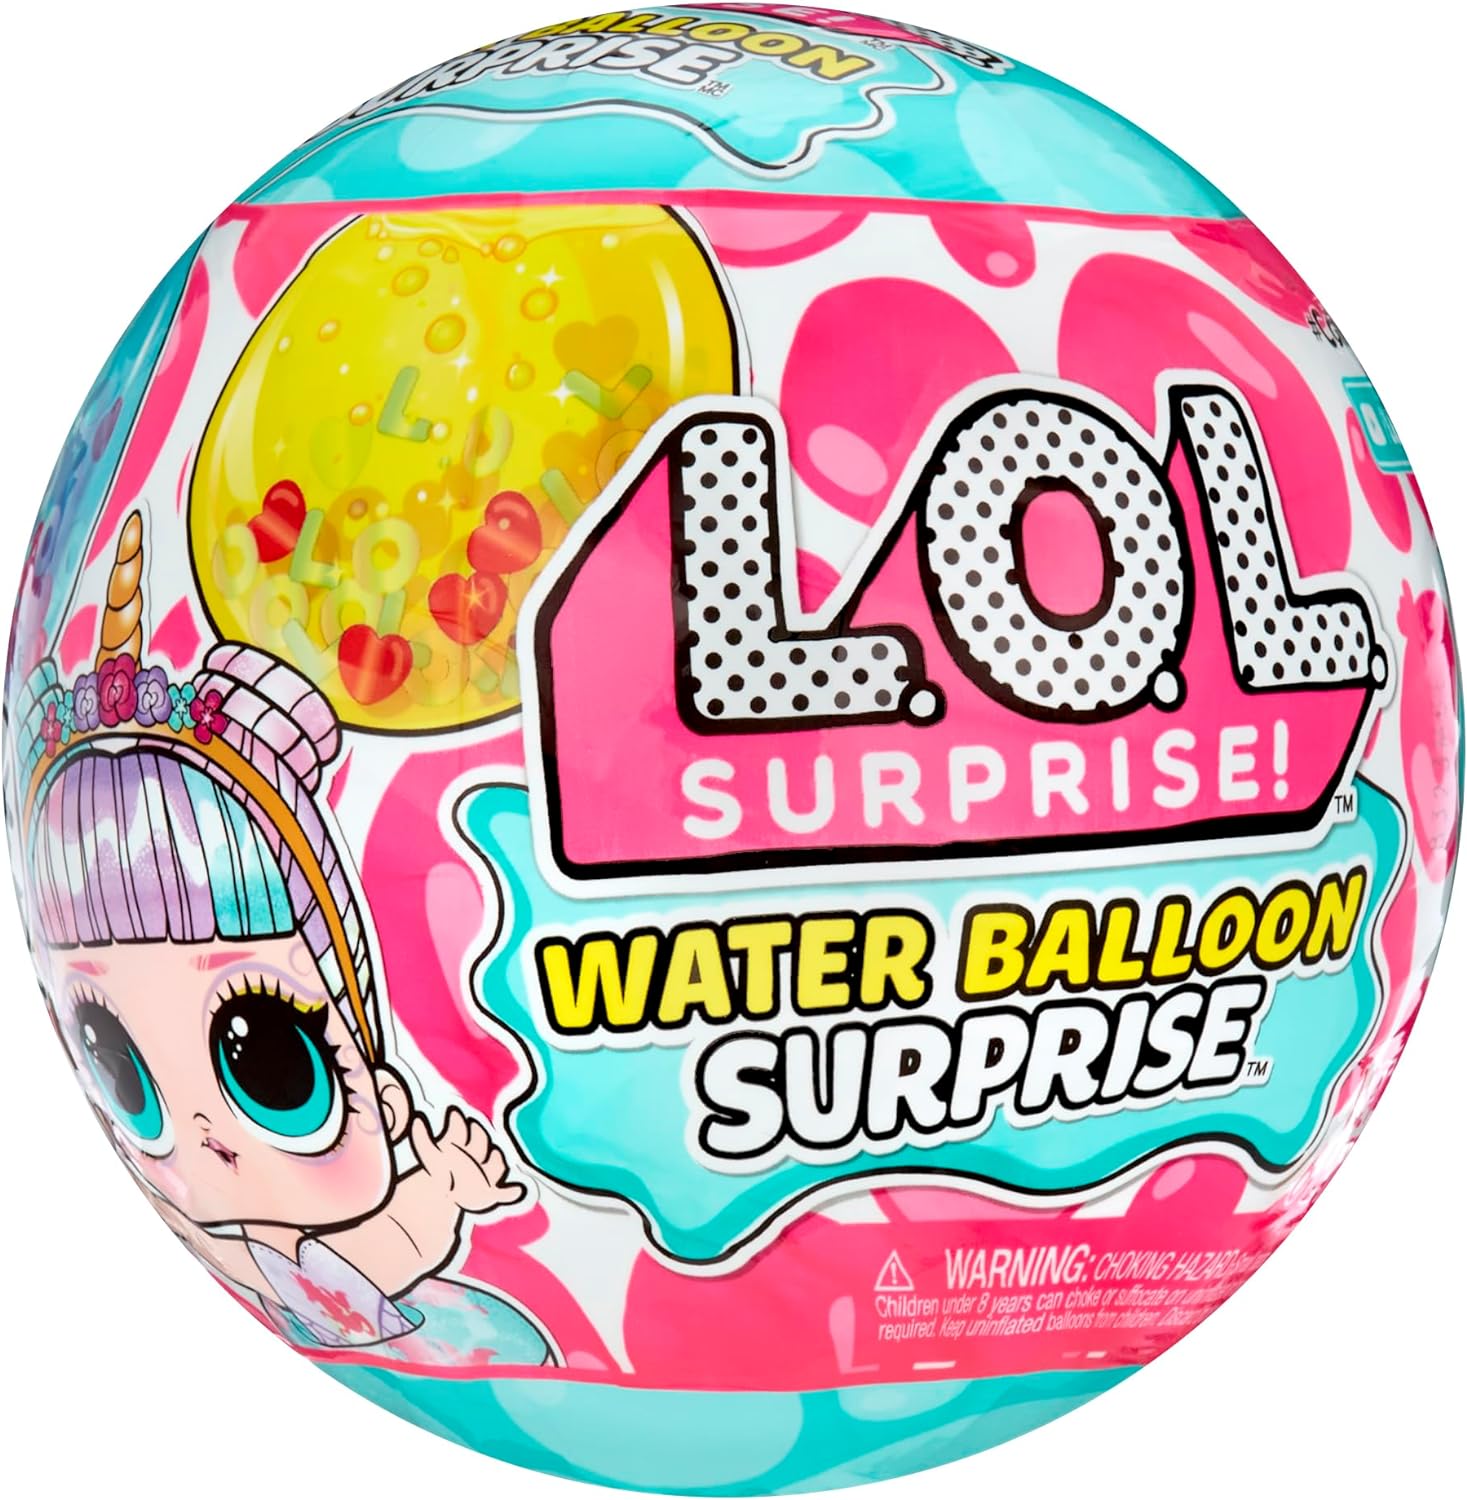 https://www.youloveit.com/uploads/posts/2023-11/1699966507_youloveit_com_lol_surprise_water_balloon_surrpise.jpg